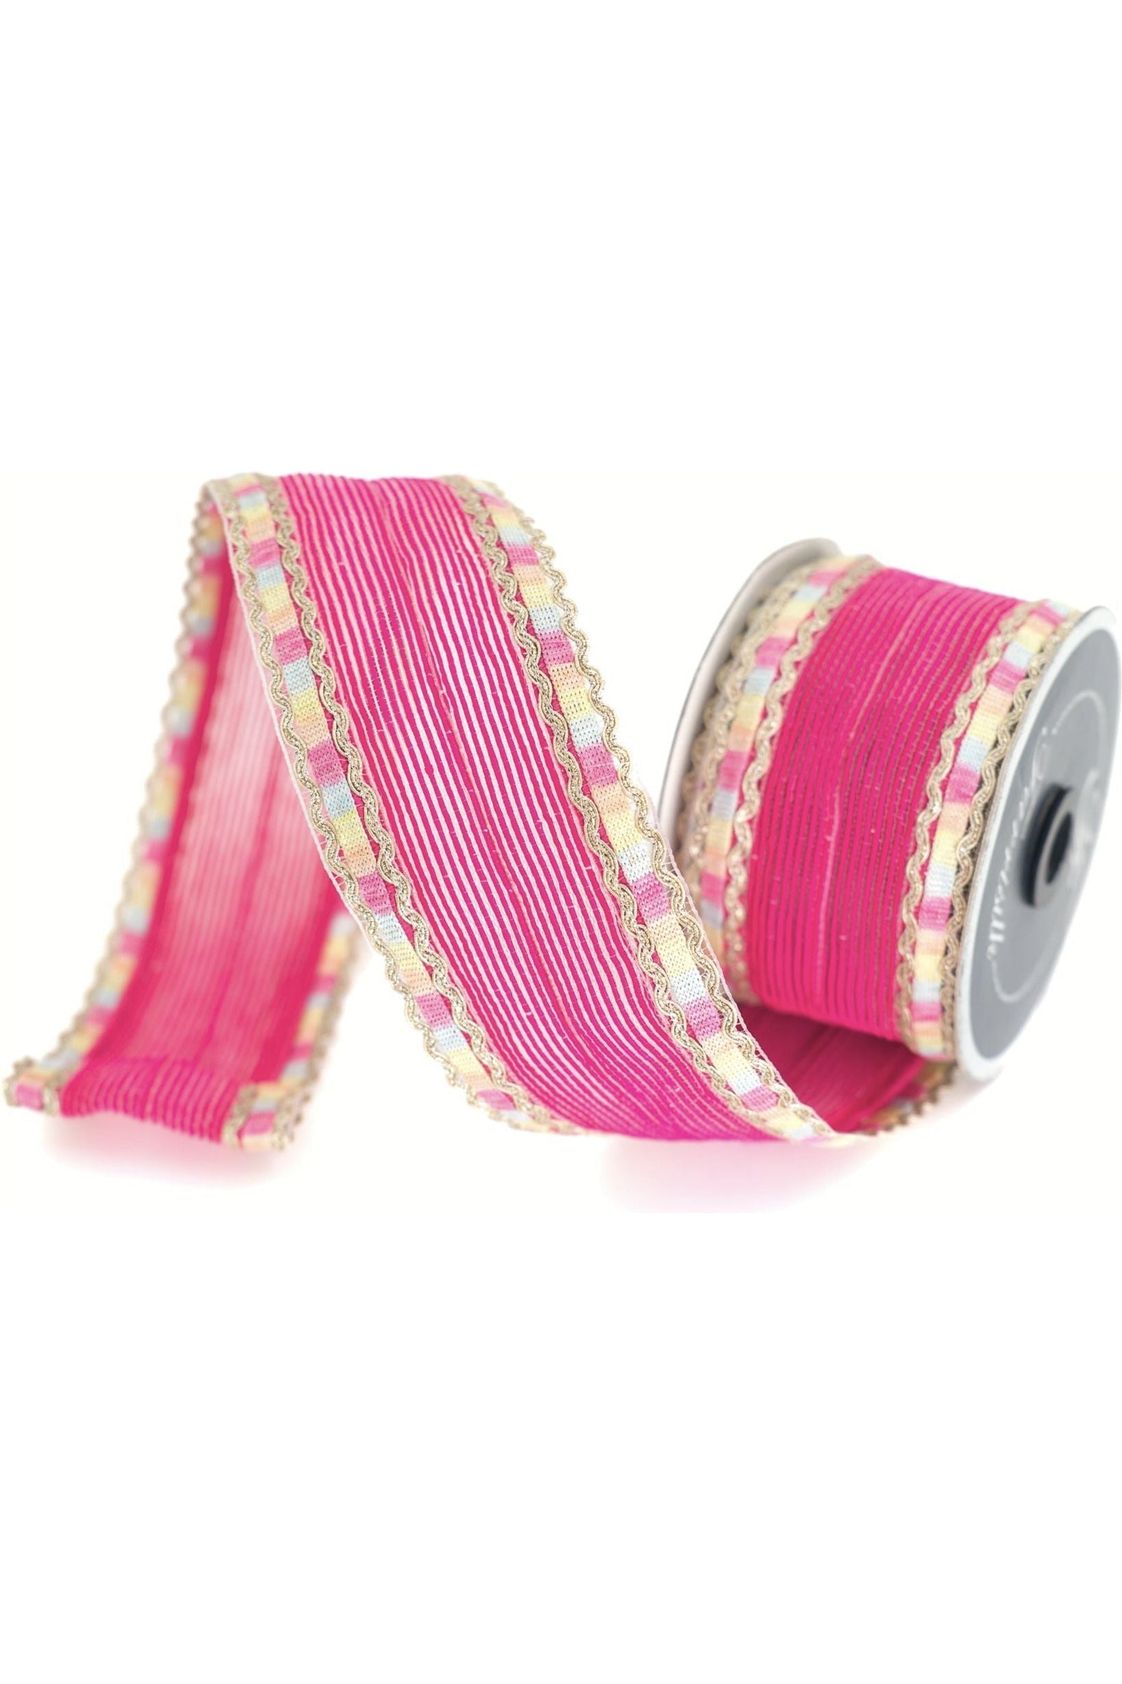 Shop For 2.5" Pastel Border Ribbon: Hot Pink (10 Yards) RK575-08